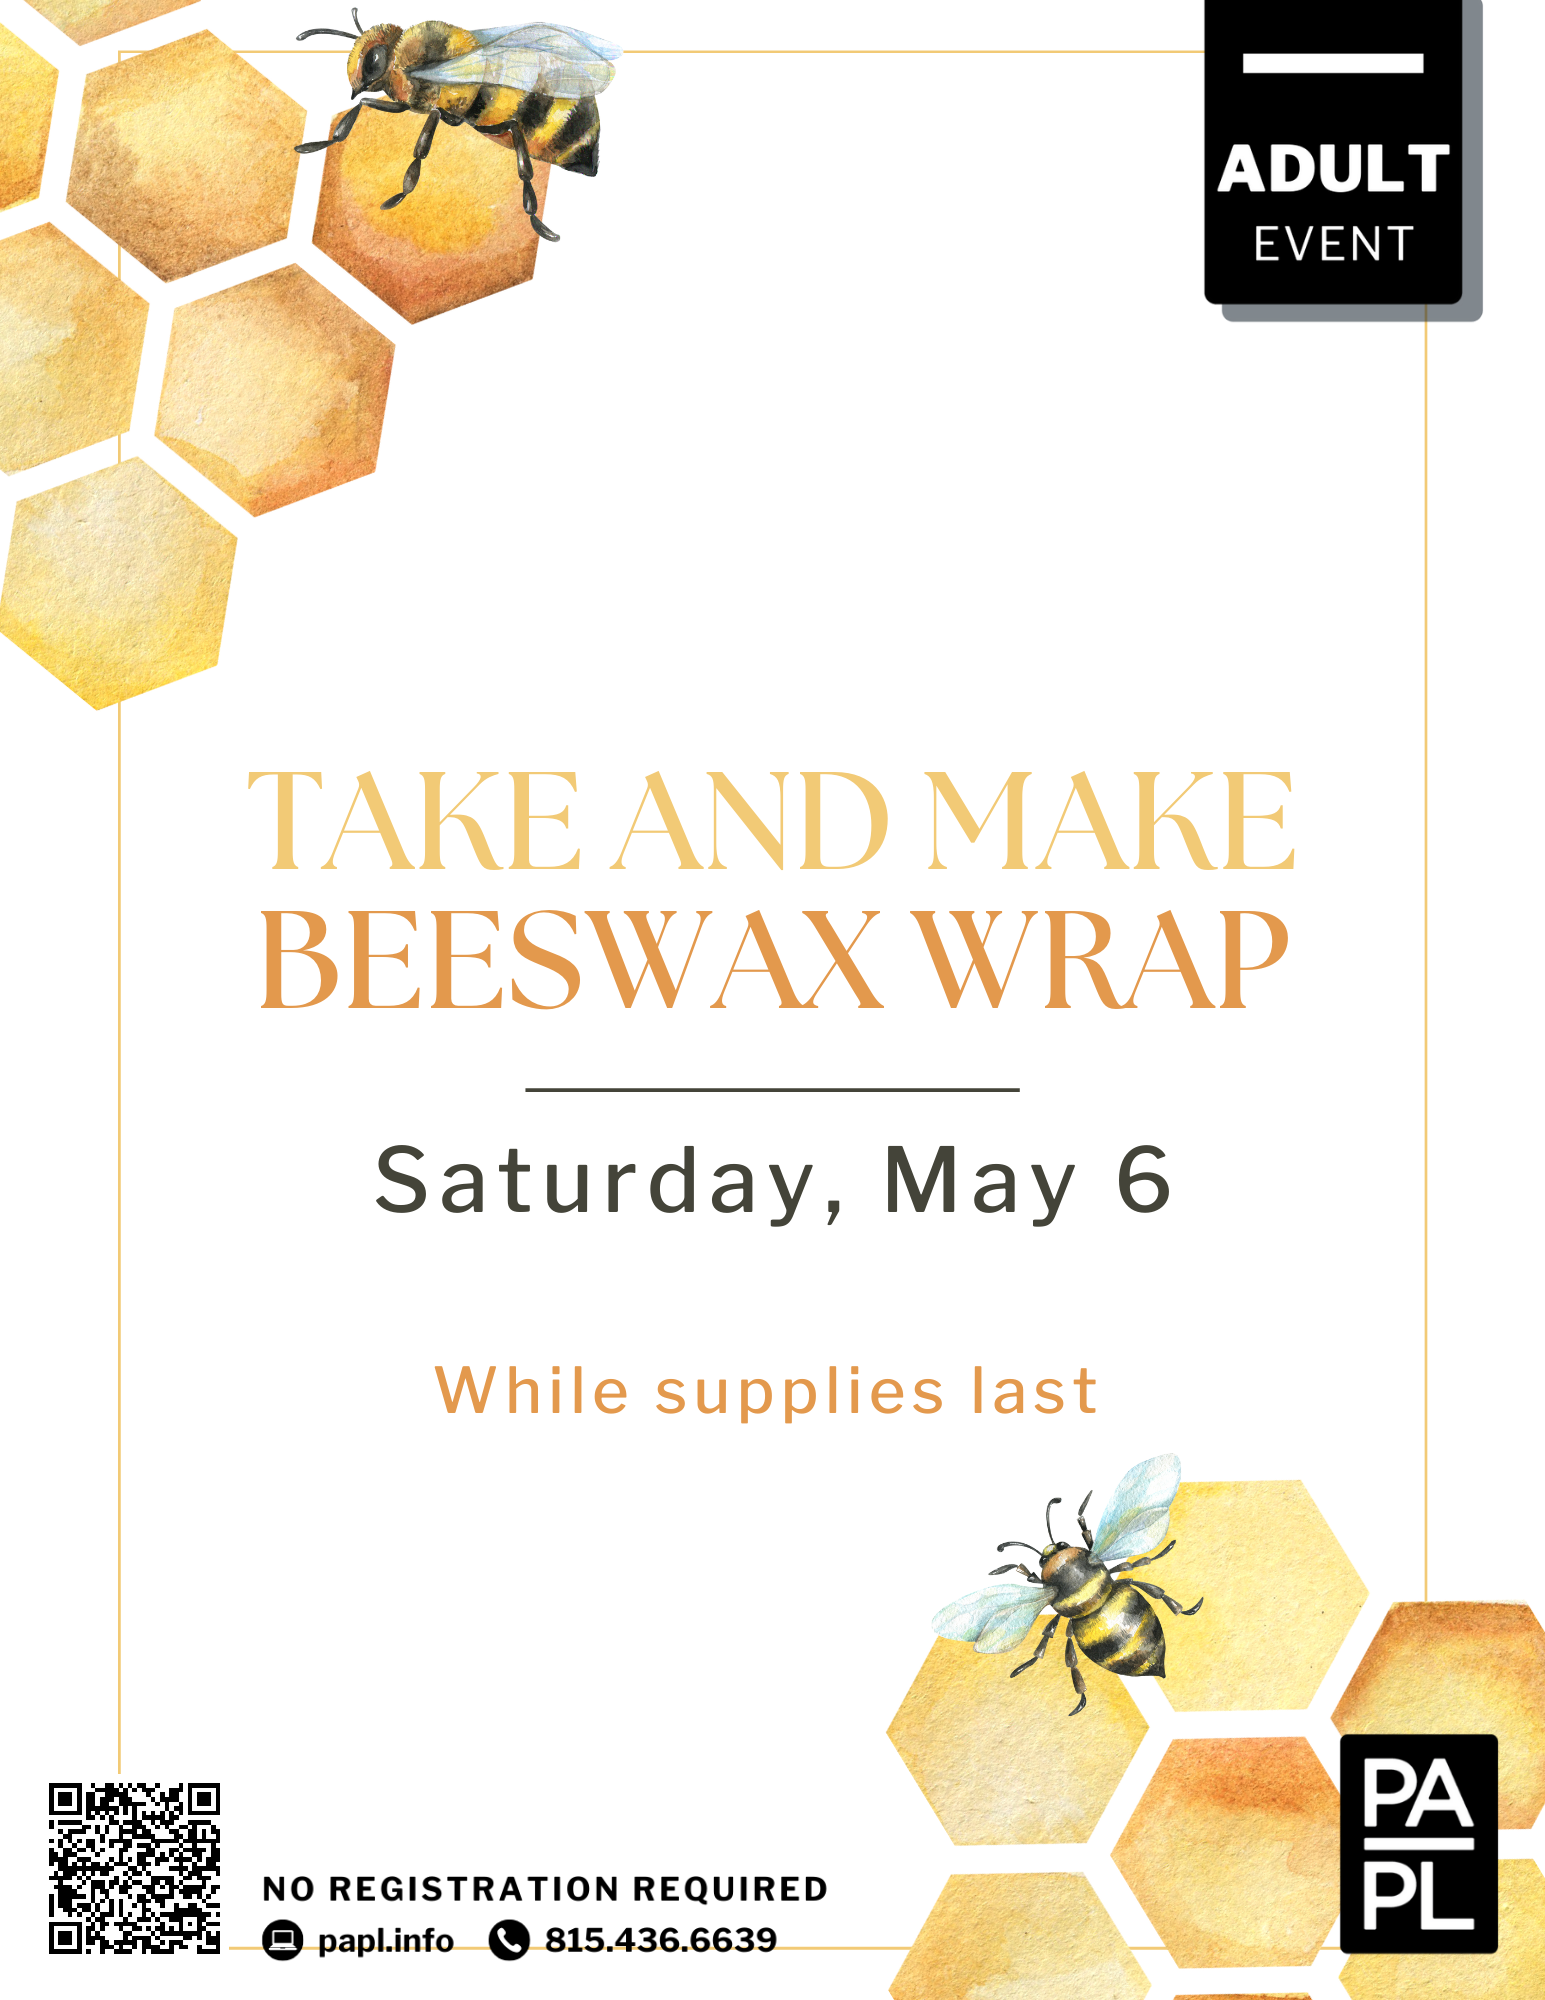 TAKE AND MAKE Beeswax Wrap